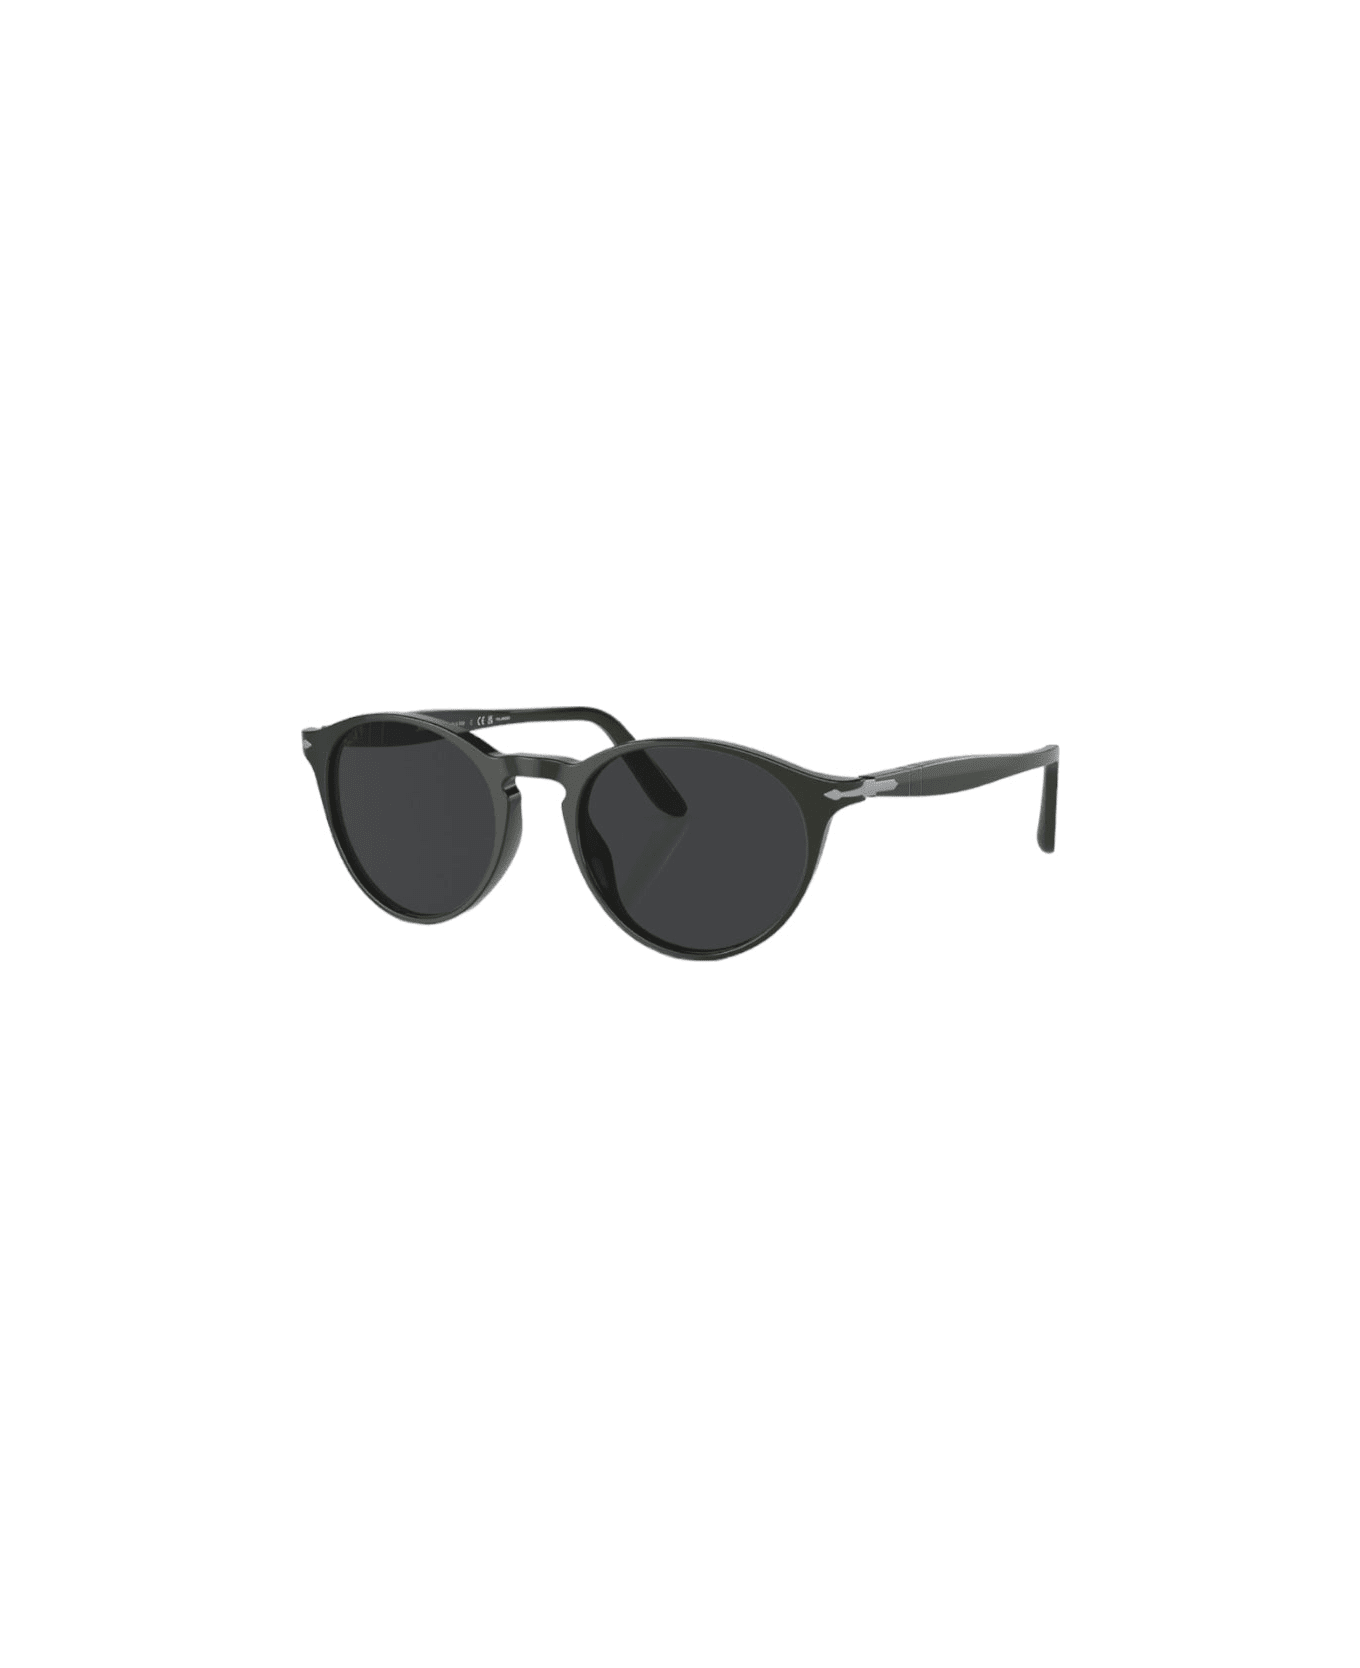 Persol 3092-s-m - Green Sunglasses サングラス